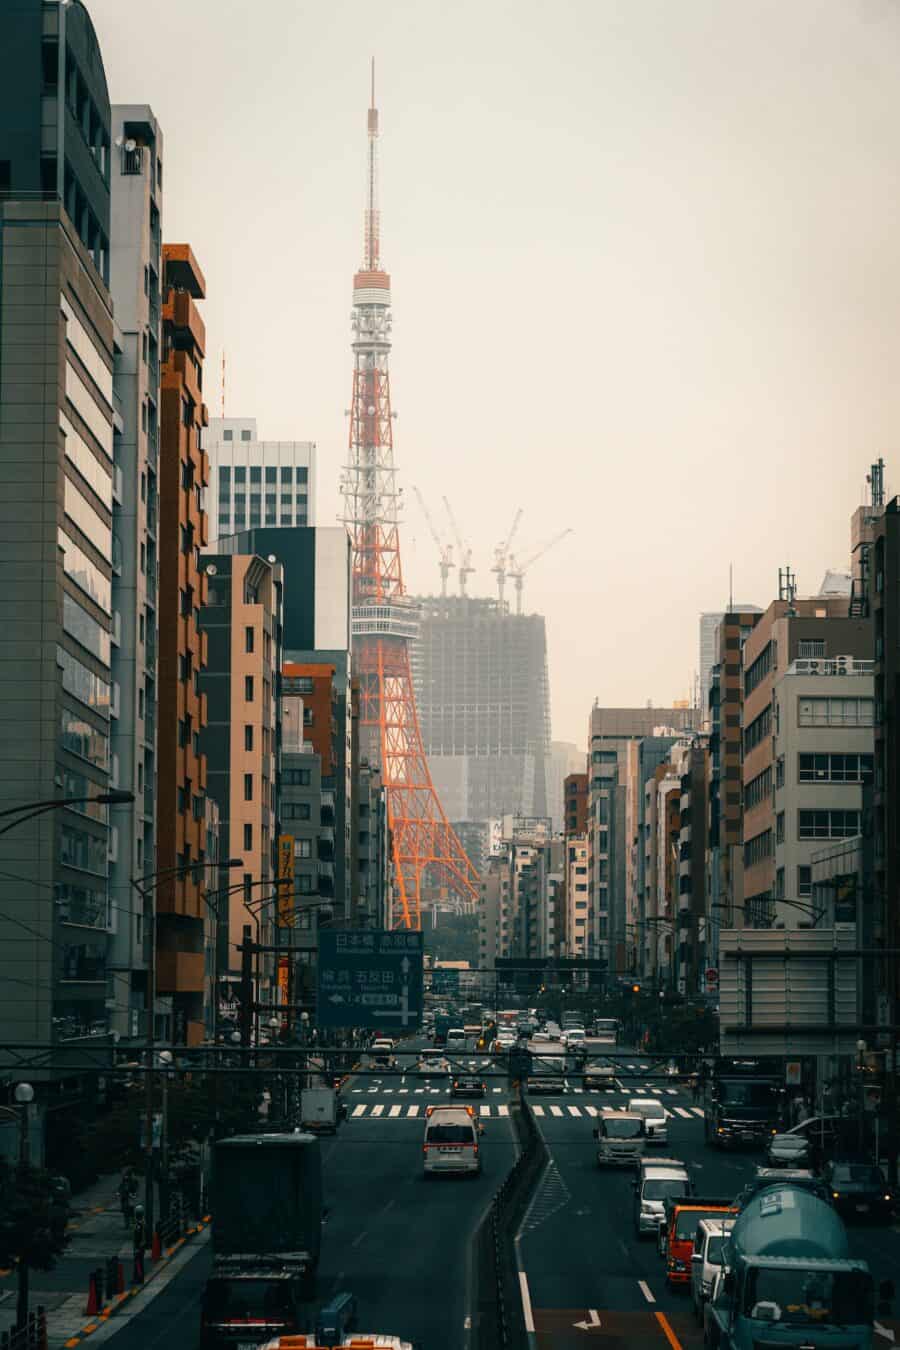 Busy Street Near Tokyo Tower